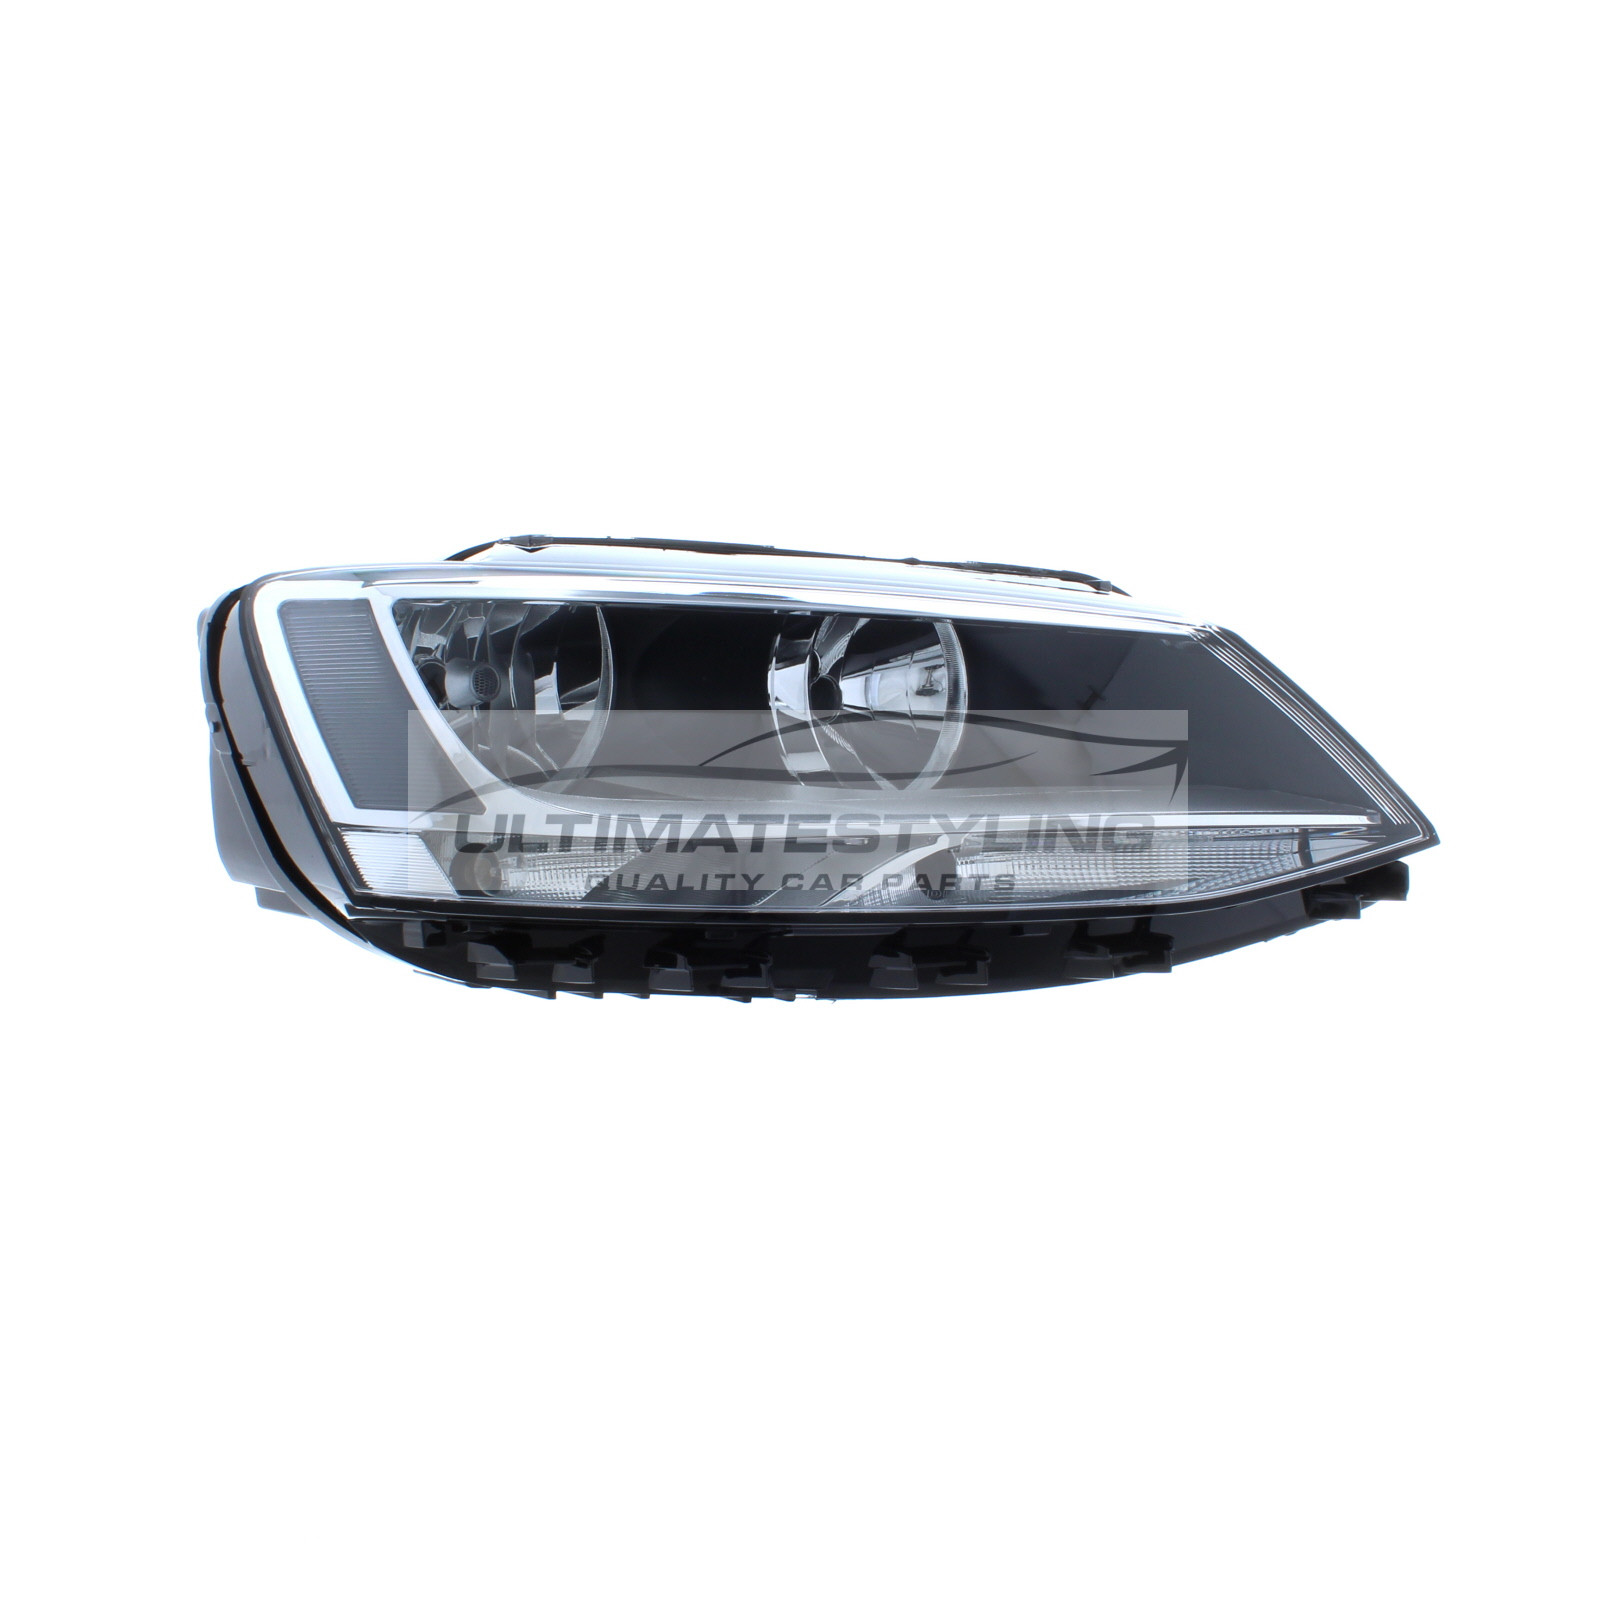 Headlight / Headlamp for VW Jetta